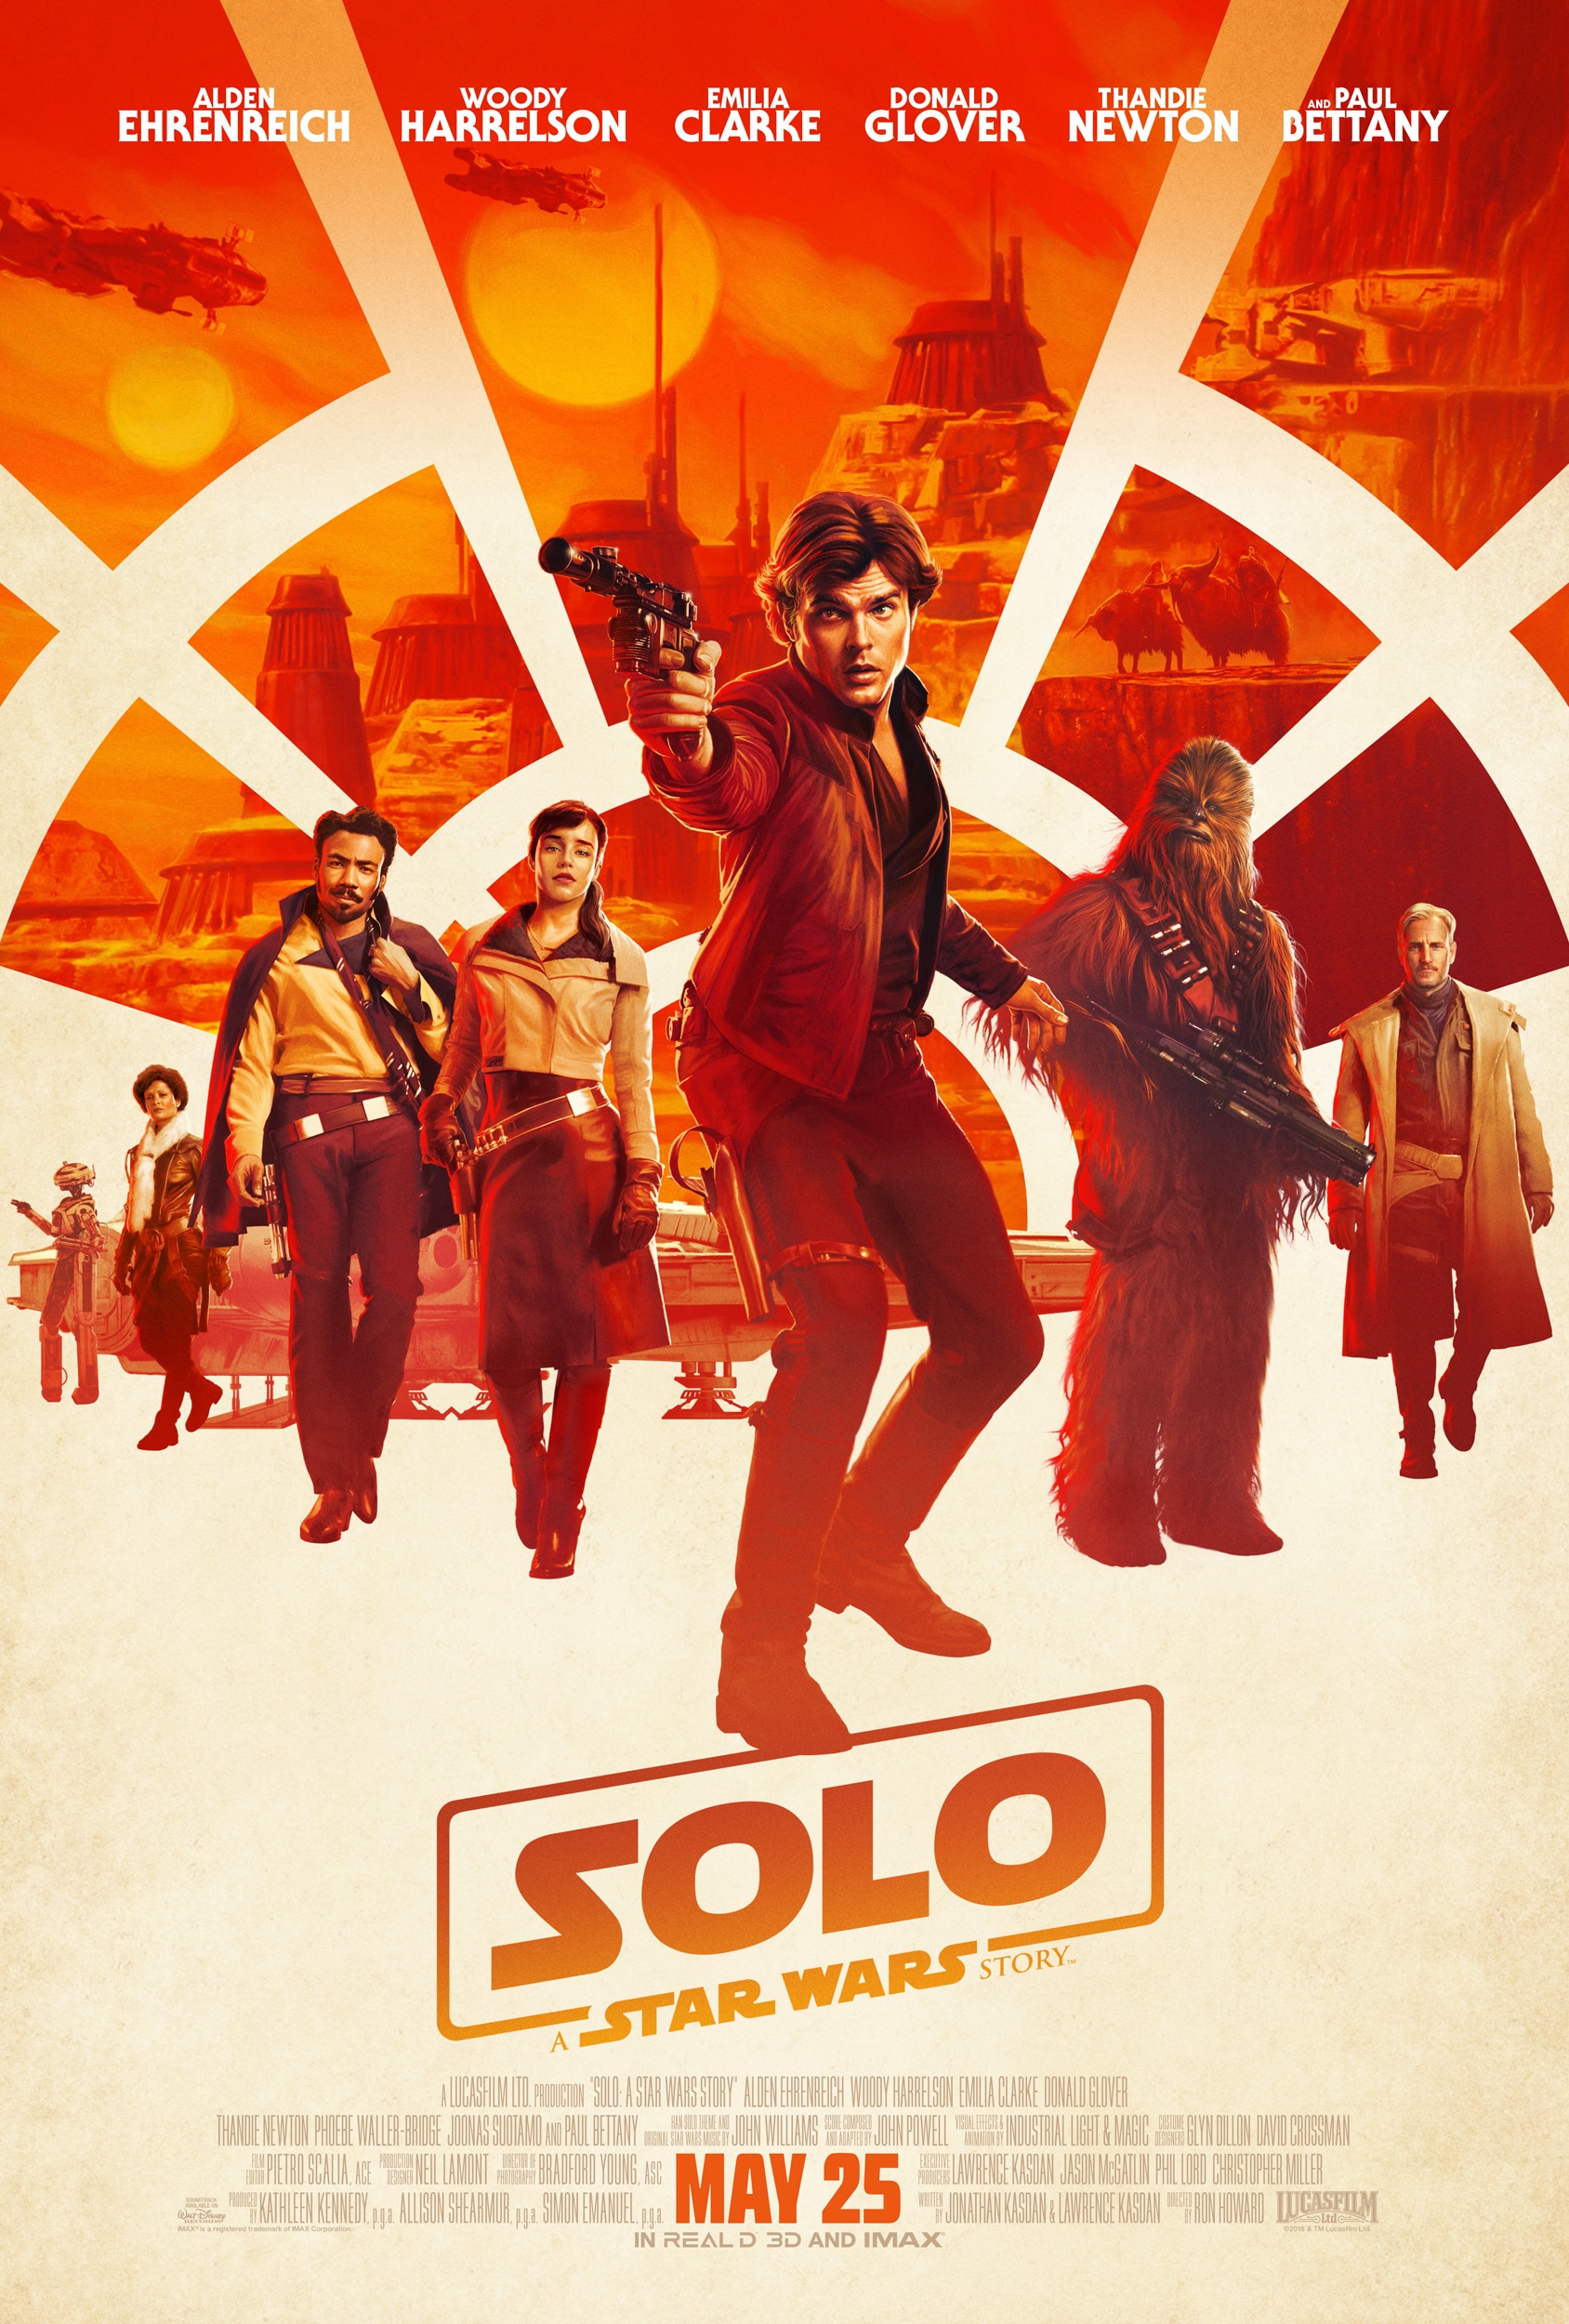 Exclusive Interview with Alden Ehrenreich "Han Solo" #HanSoloEvent #HanSolo